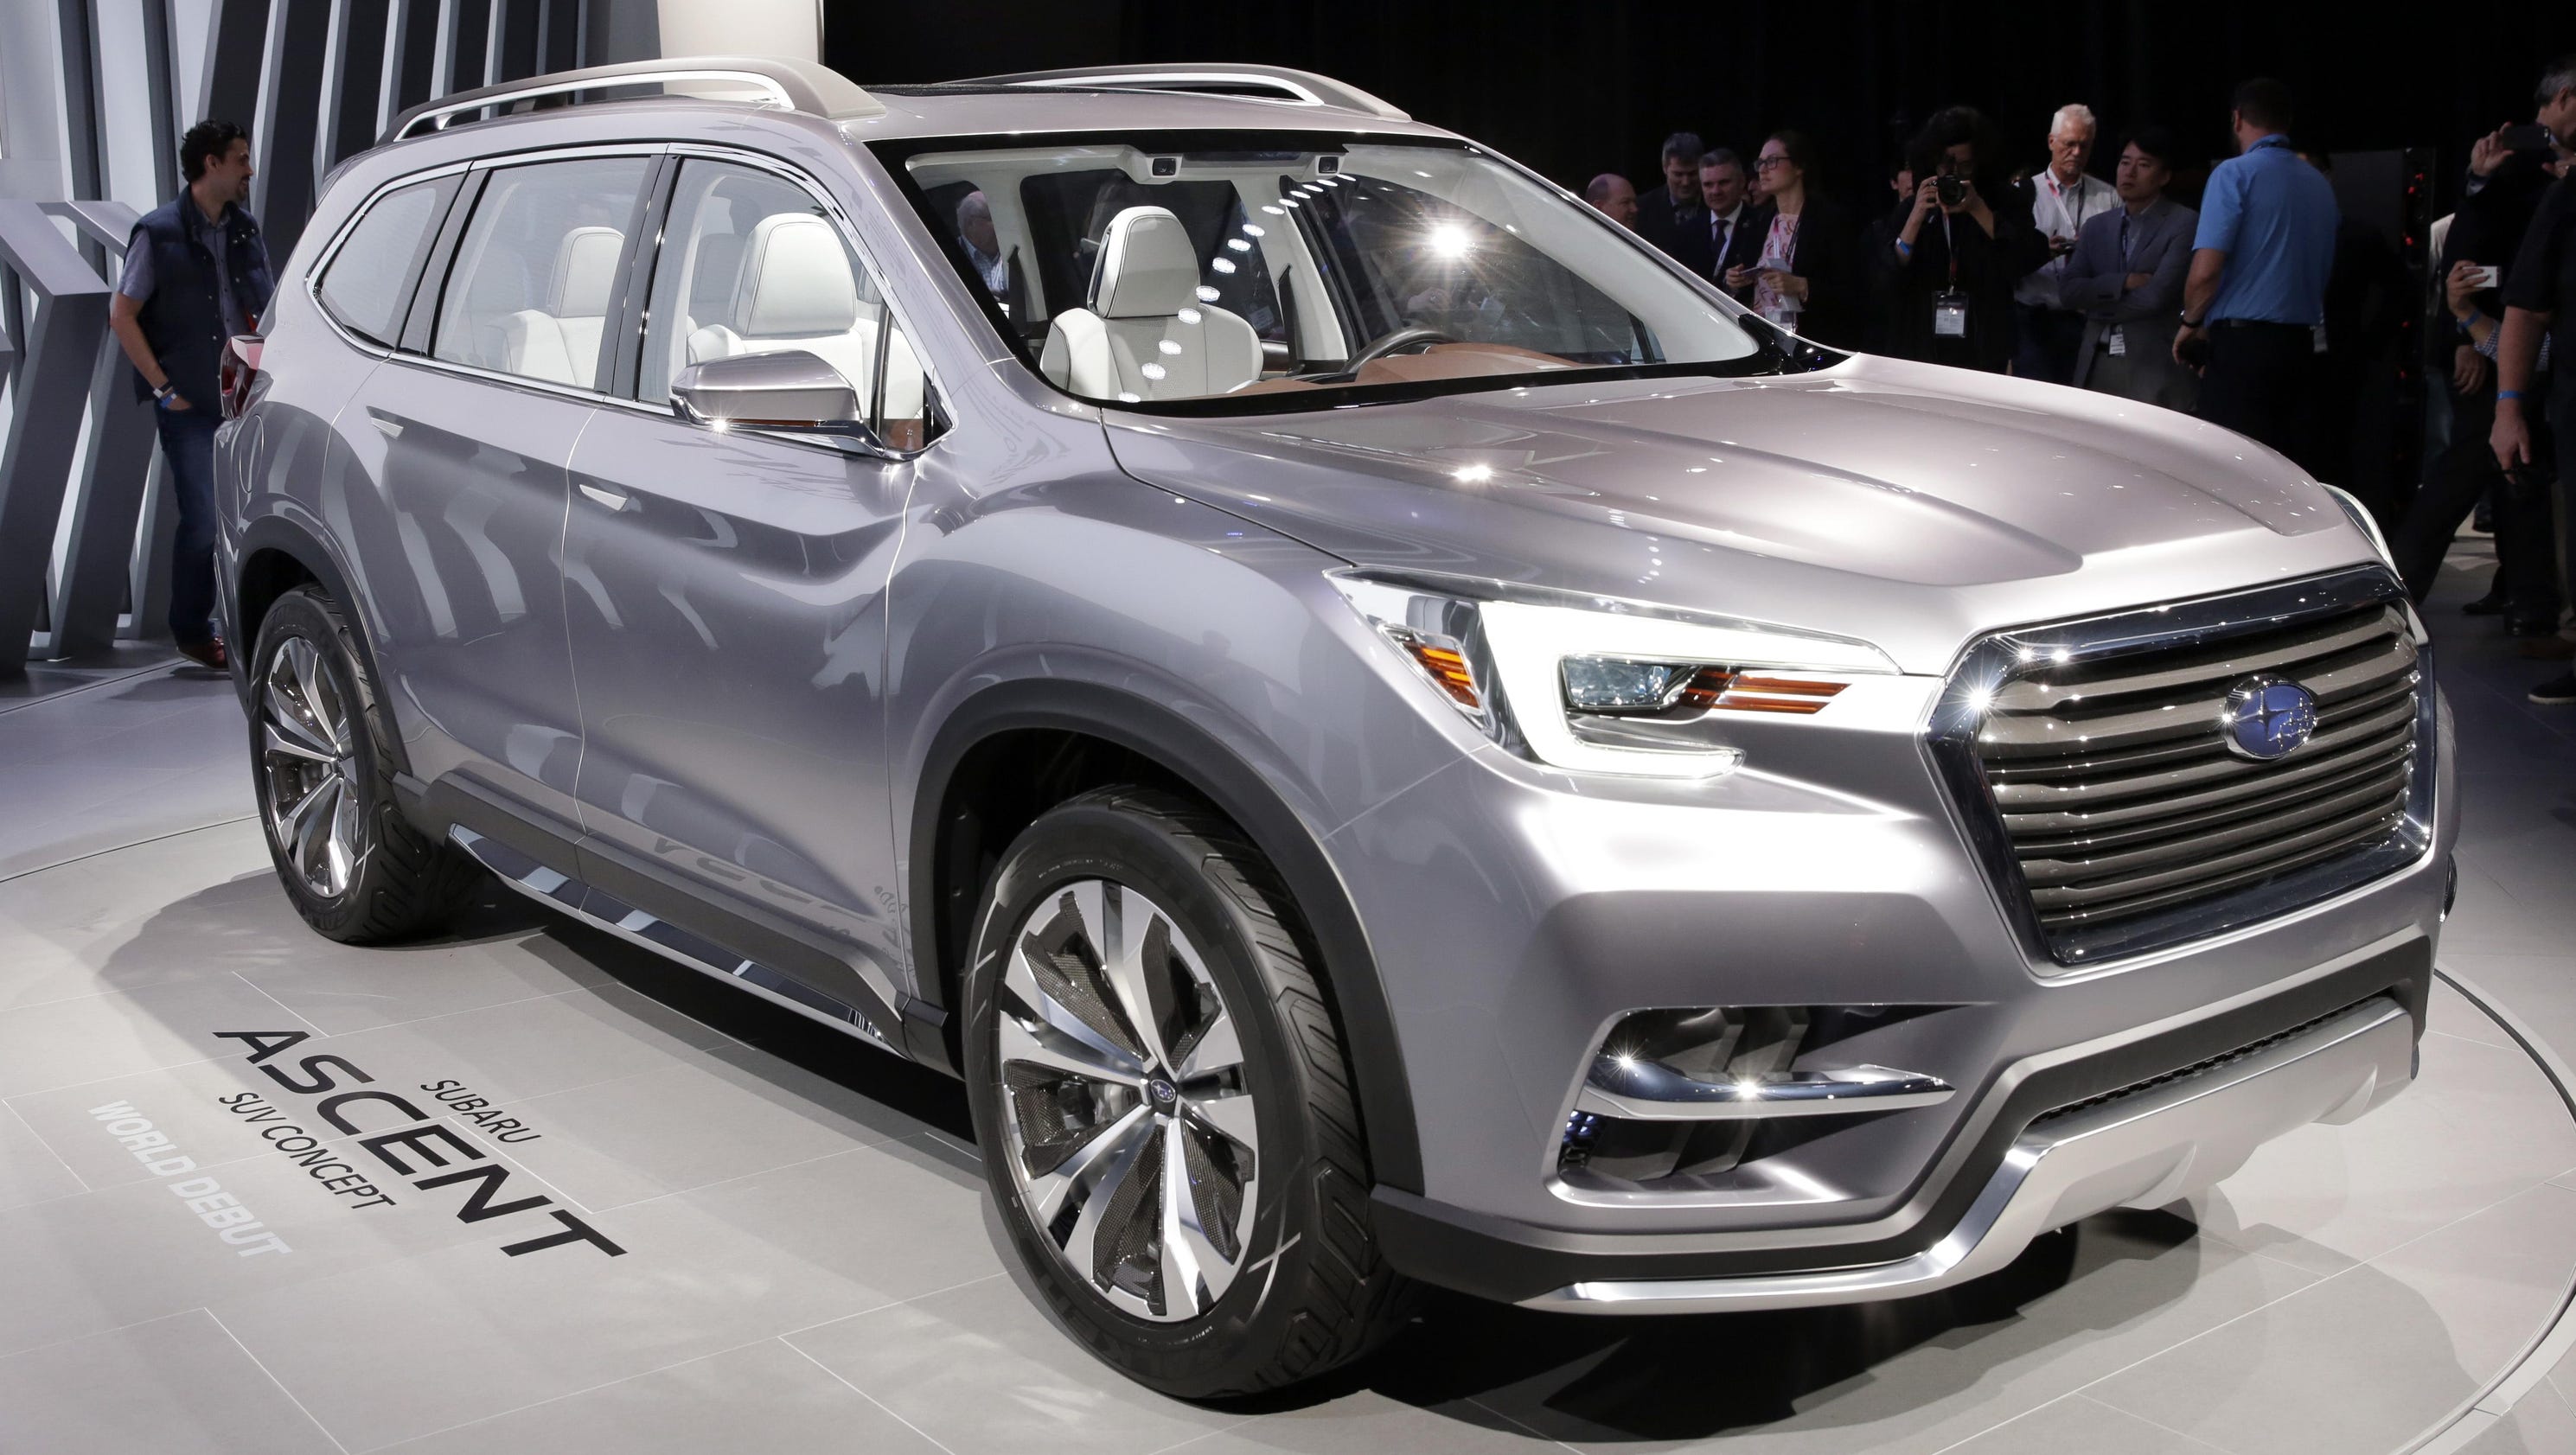 Subaru rolls out its Ascent fullsize SUV